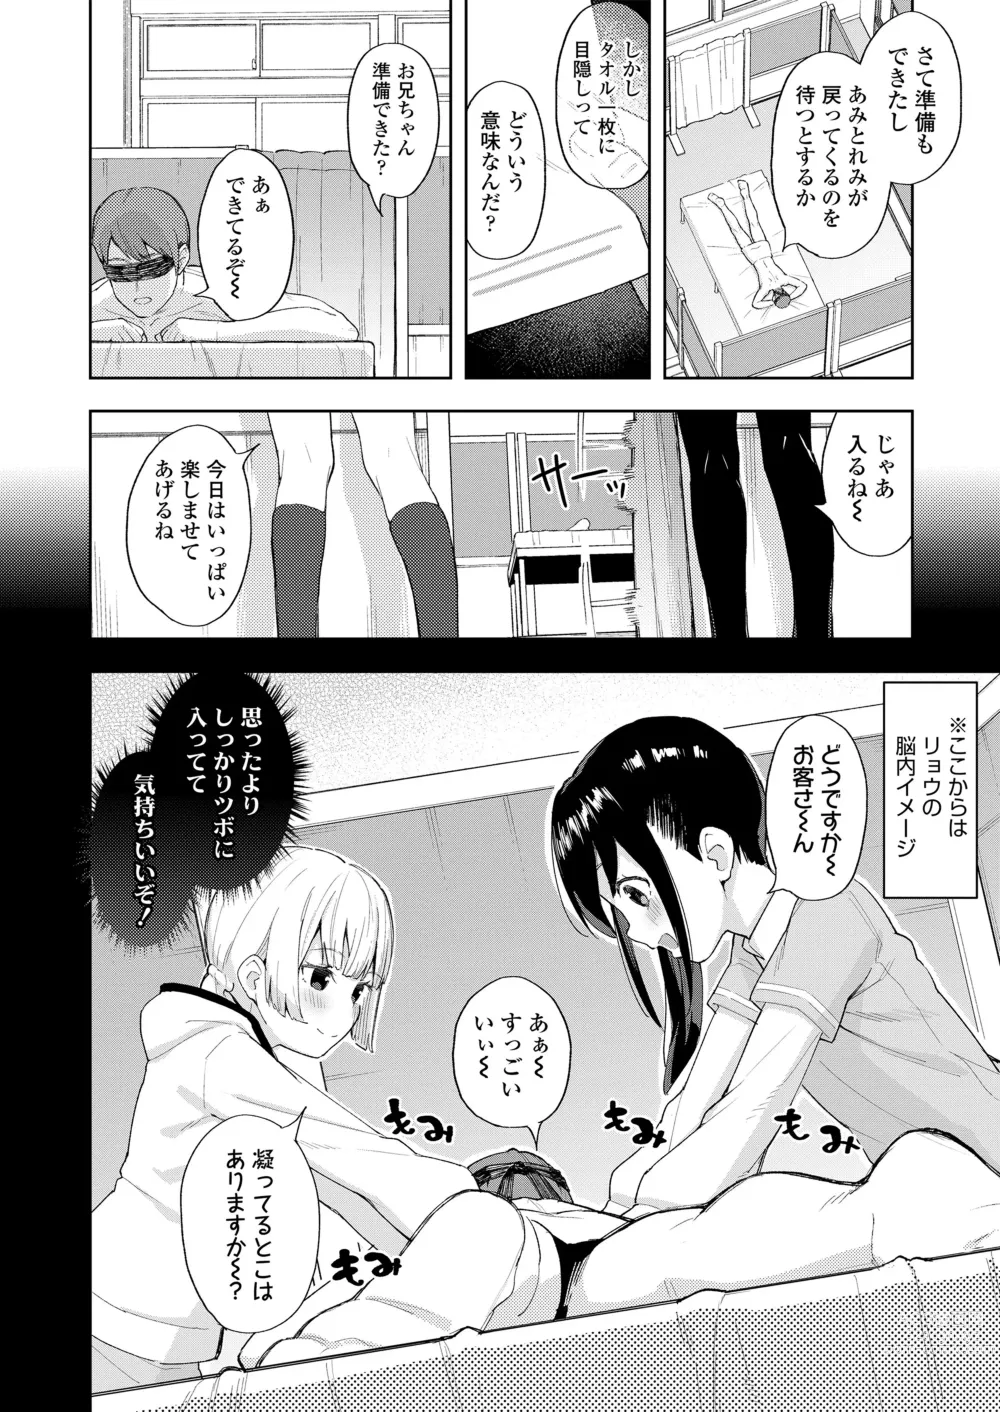 Page 6 of manga Koakuma-tachi ga Yattekita!